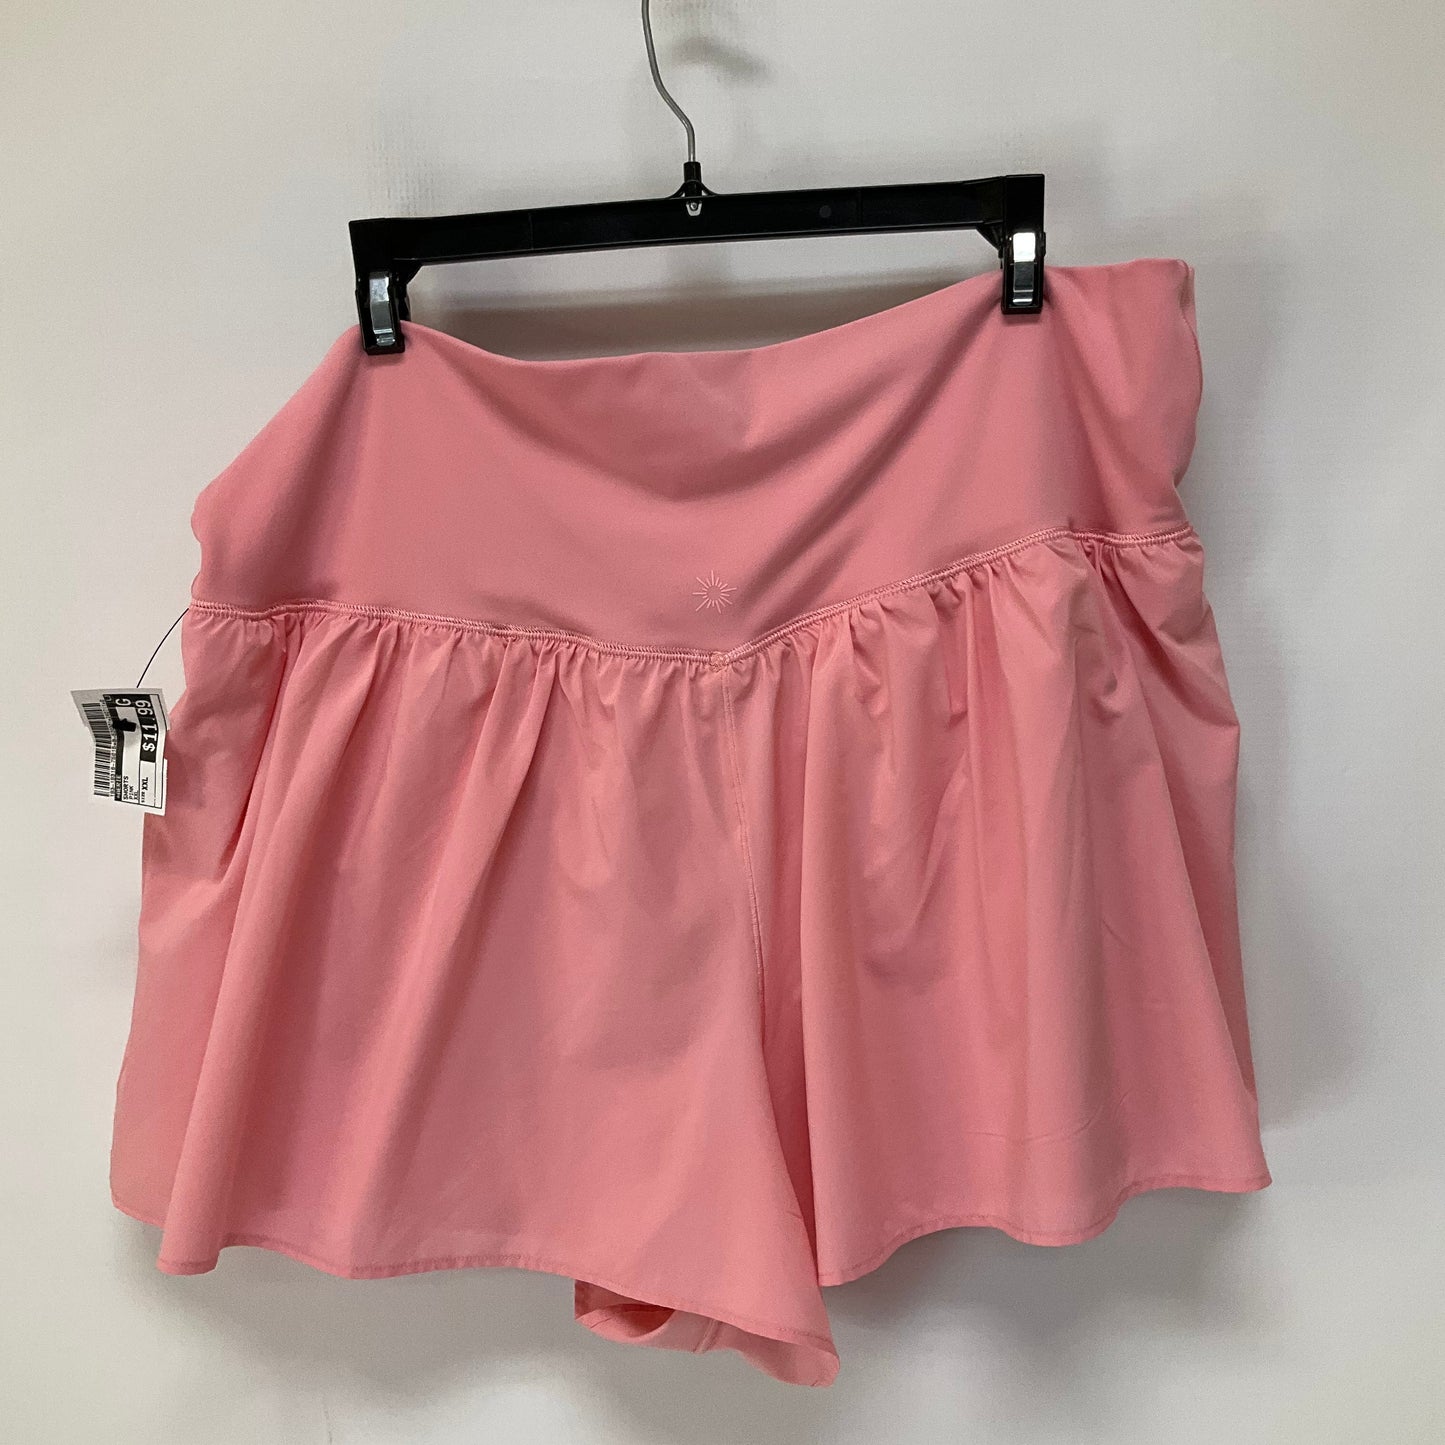 Pink Shorts Aerie, Size Xxl